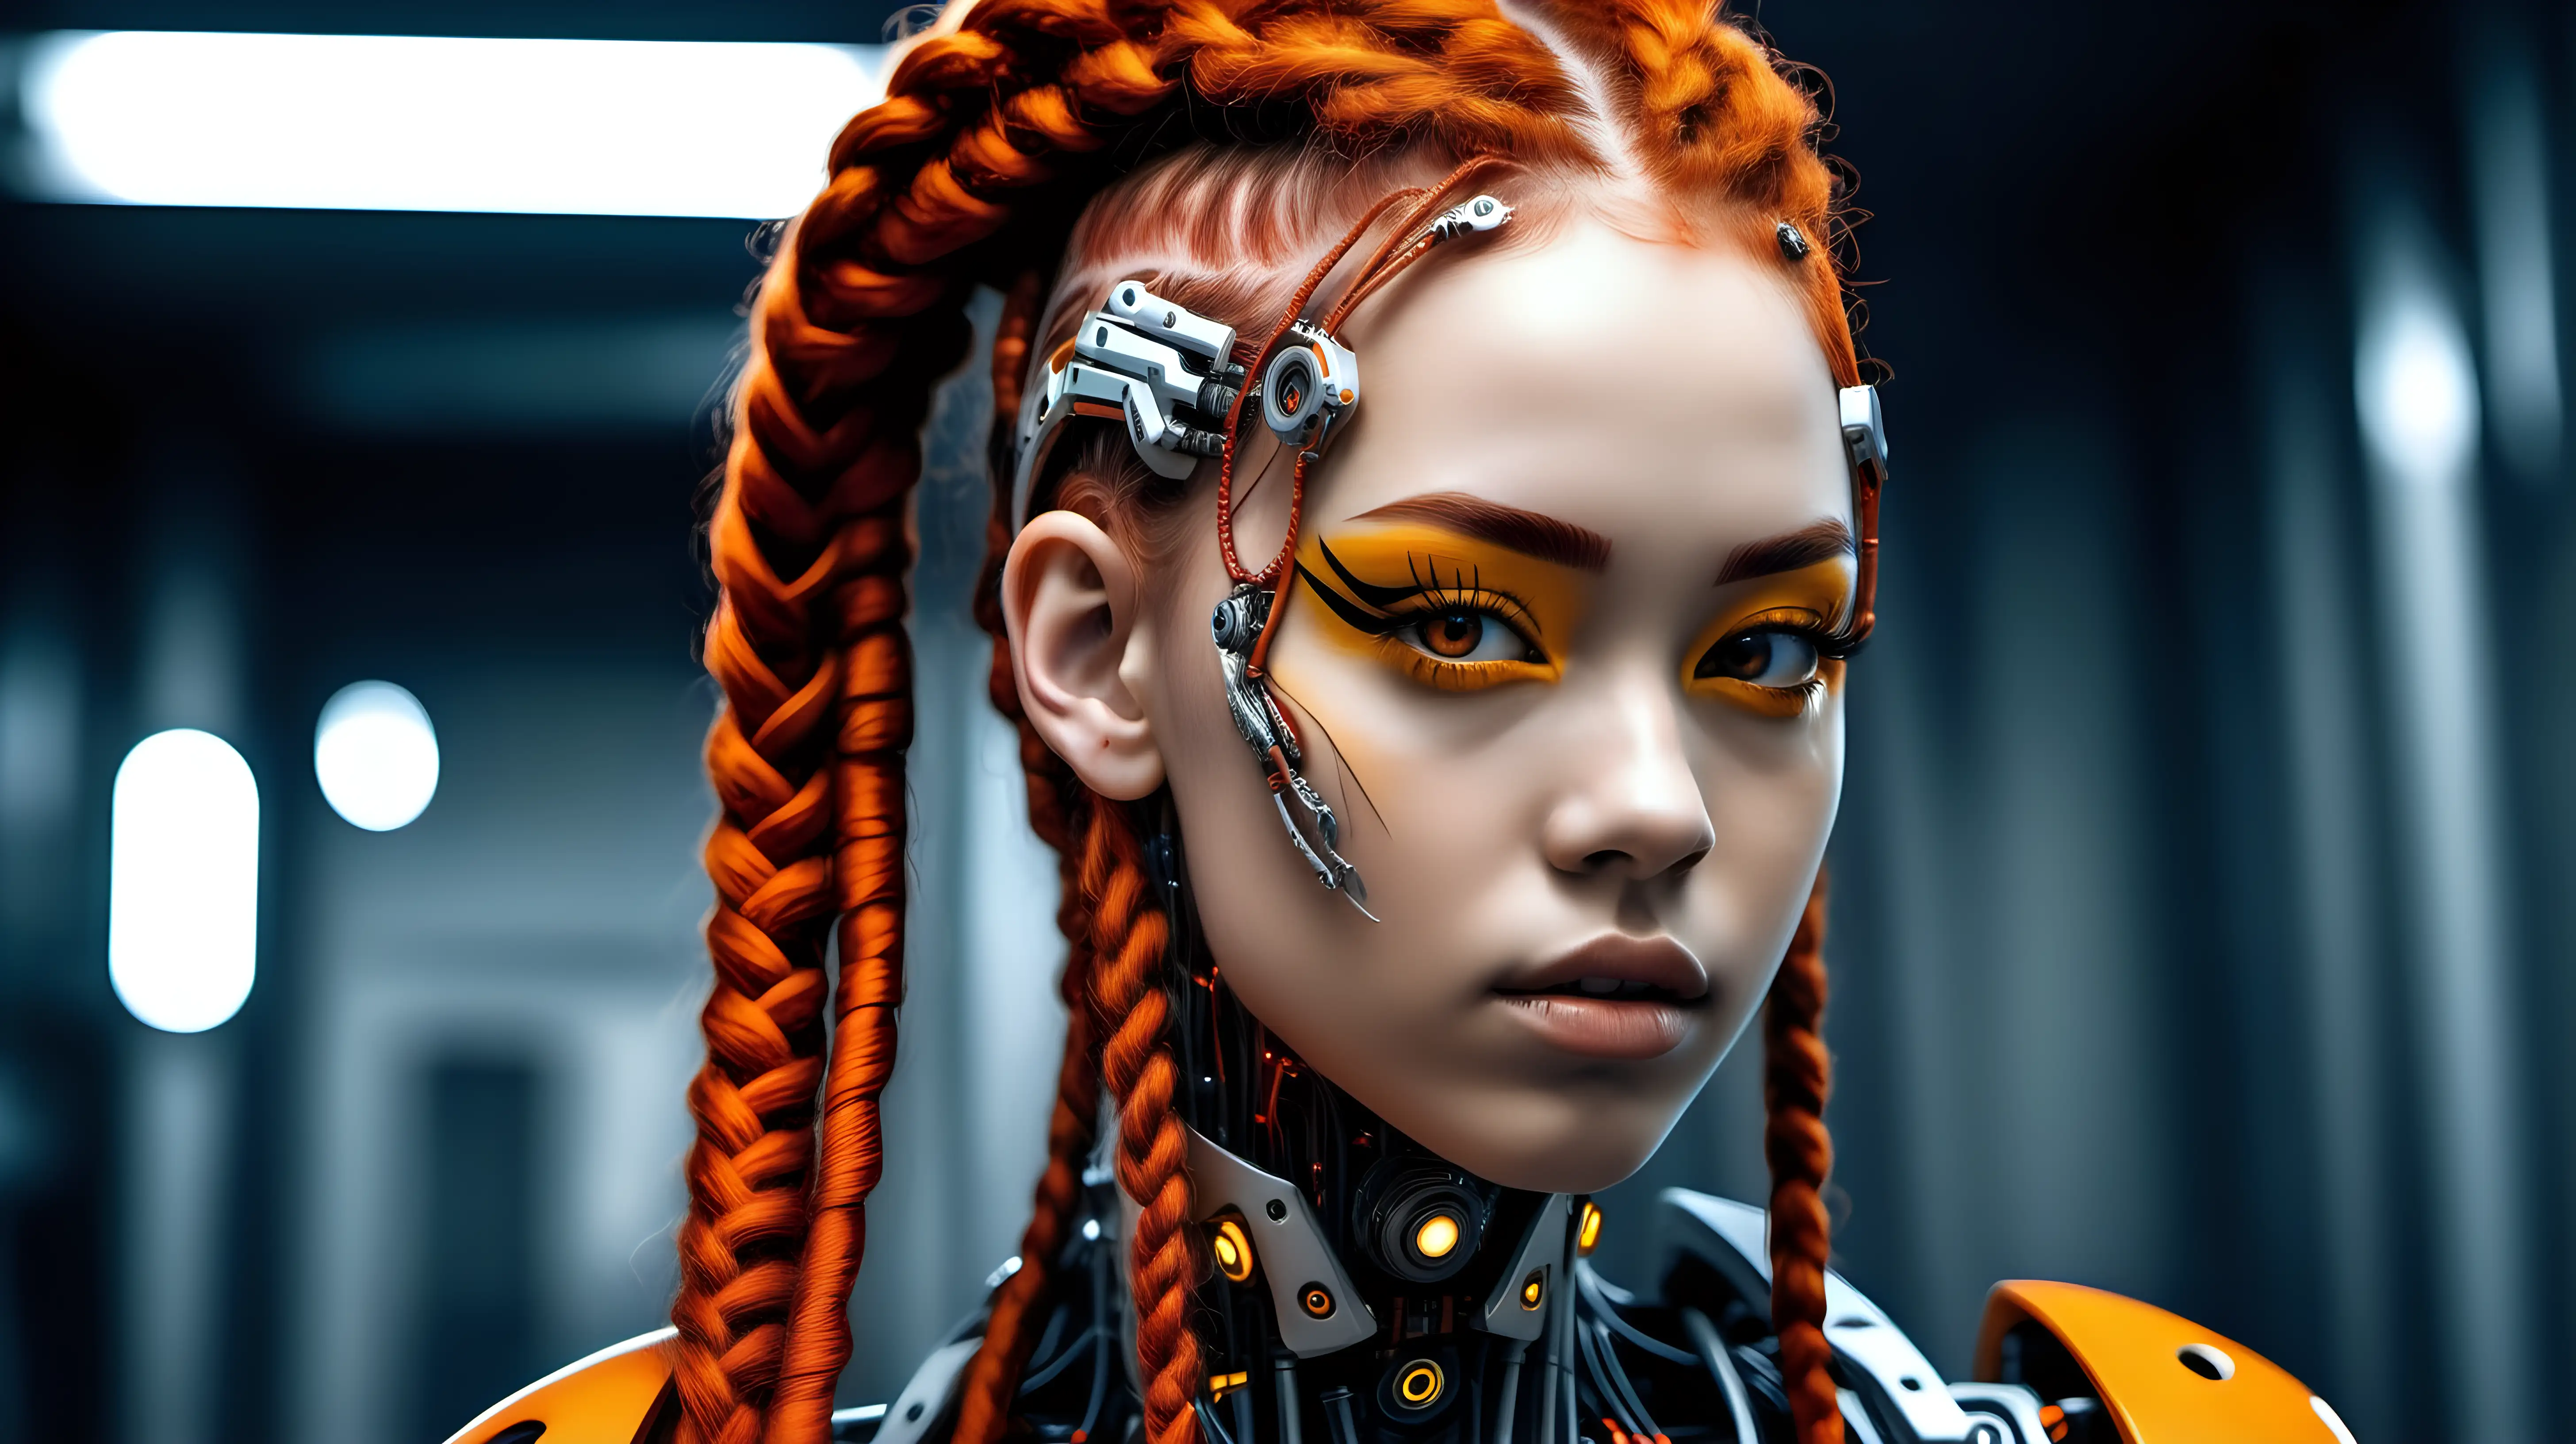 Stunning 18YearOld European Cyborg with Vibrant Multicolored Braids